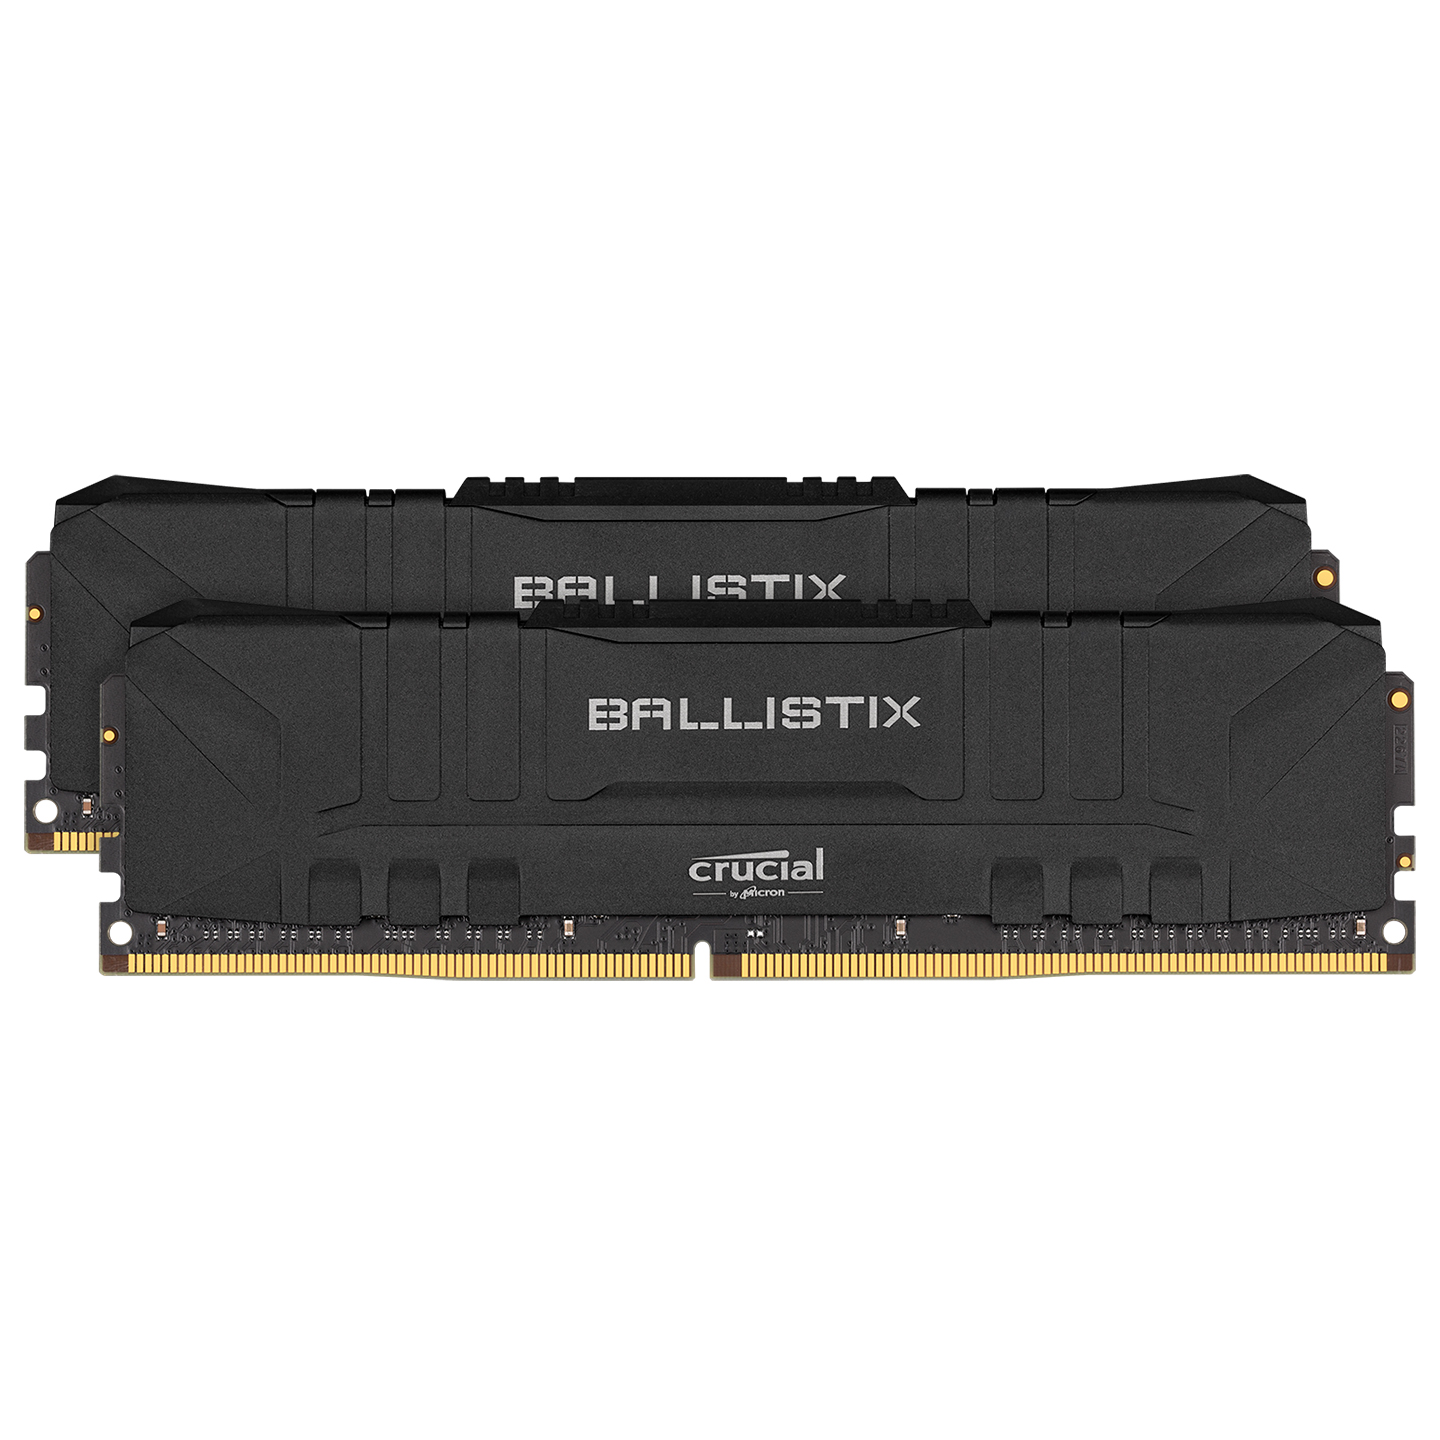 Ballistix Crucial BL2K16G32C16U4B 2x16GB (32GB Kit) DDR4 3200MT/s CL16 Unbuffered DIMM 288pin Black RGB RAM